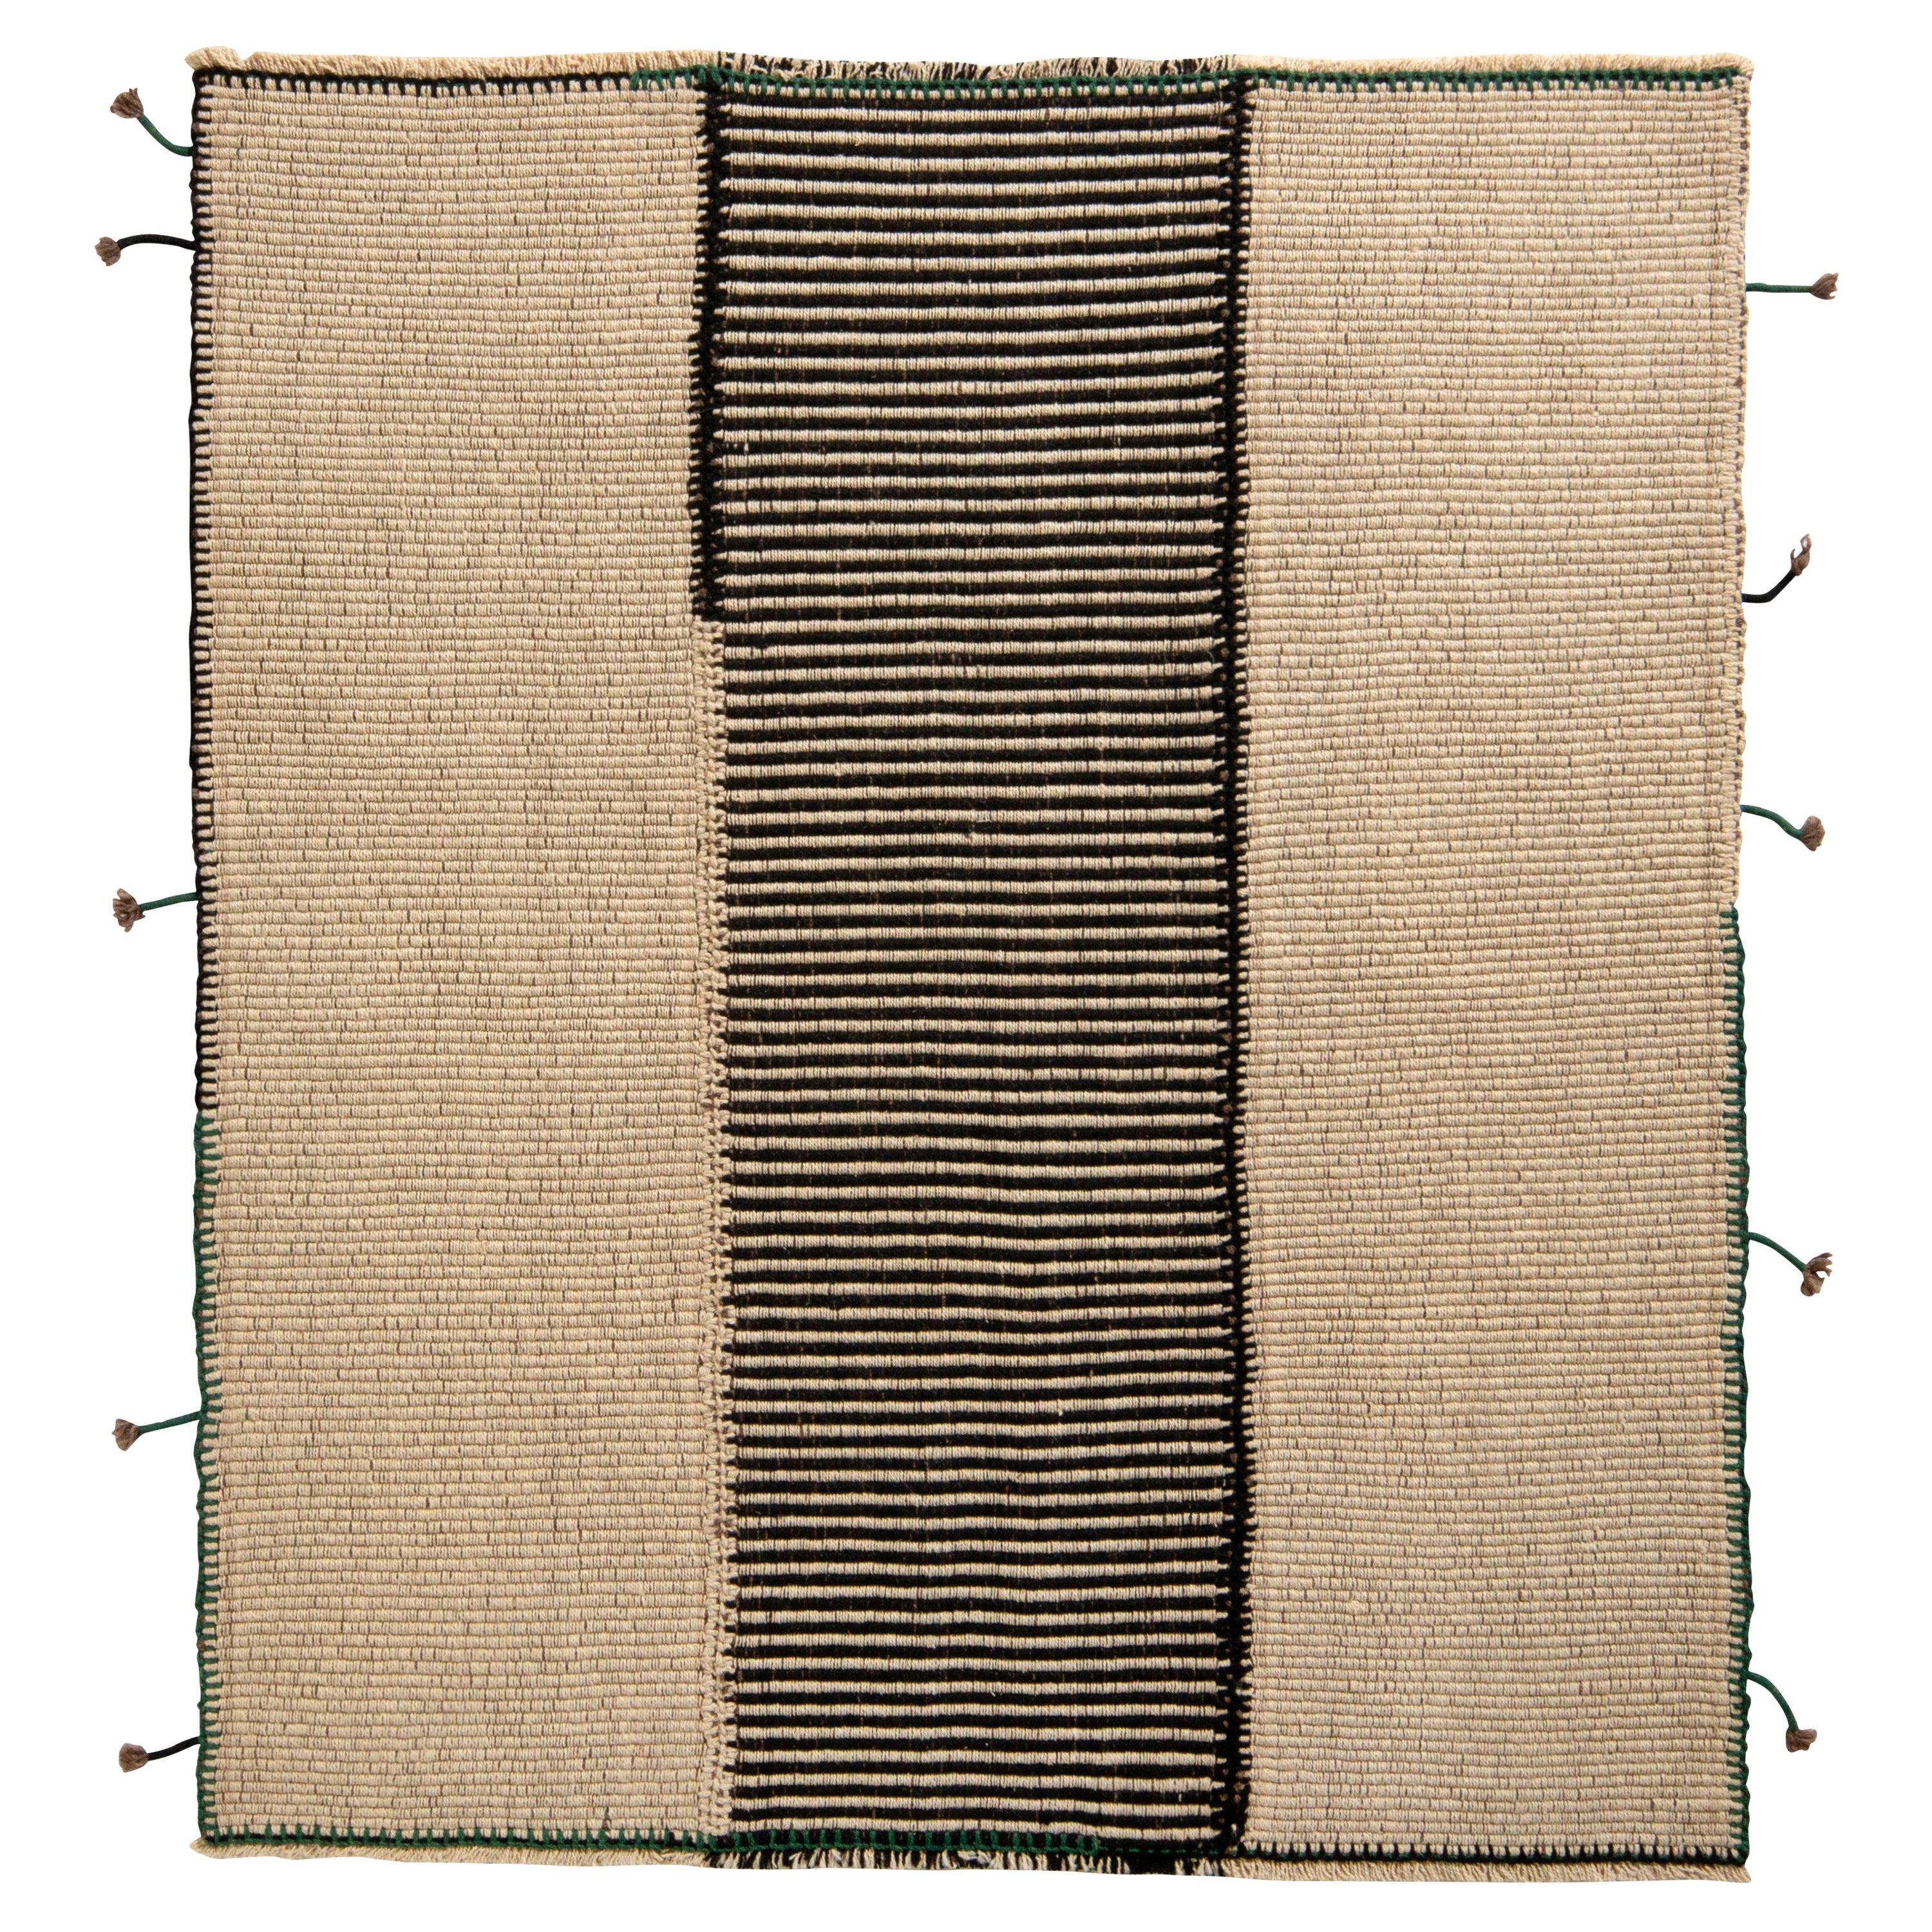 Modern Custom Kilim in Beige-Brown, Black Striped Pattern by Rug & Kilim For Sale